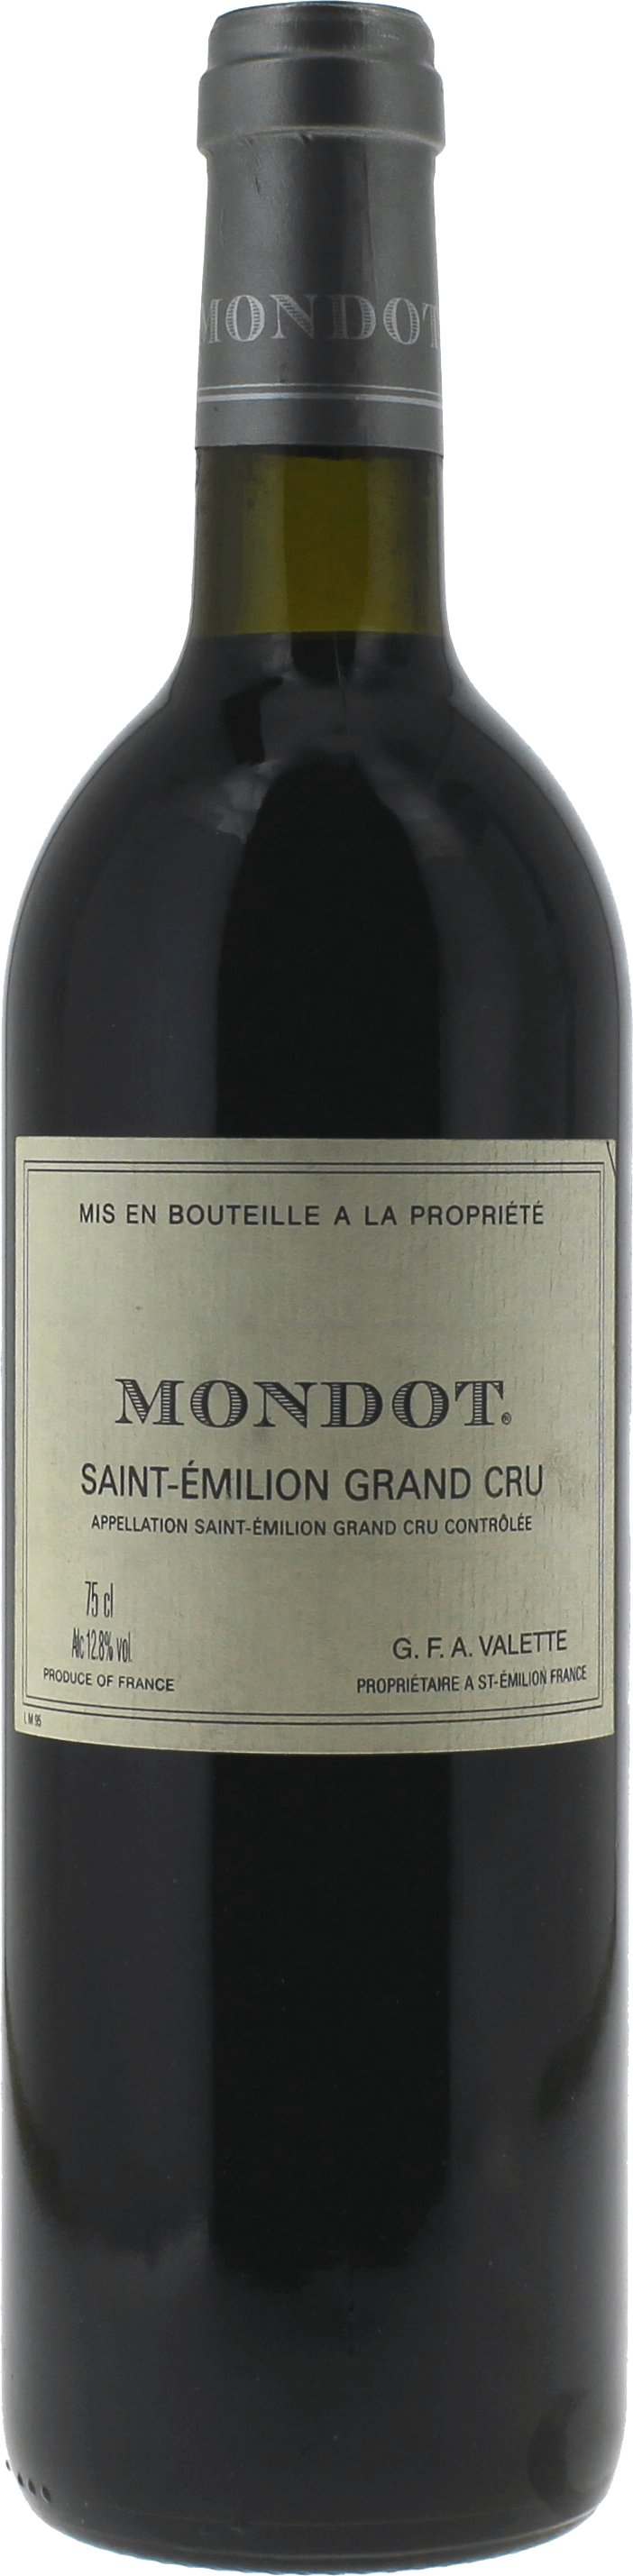 Mondot 1995  Saint-Emilion